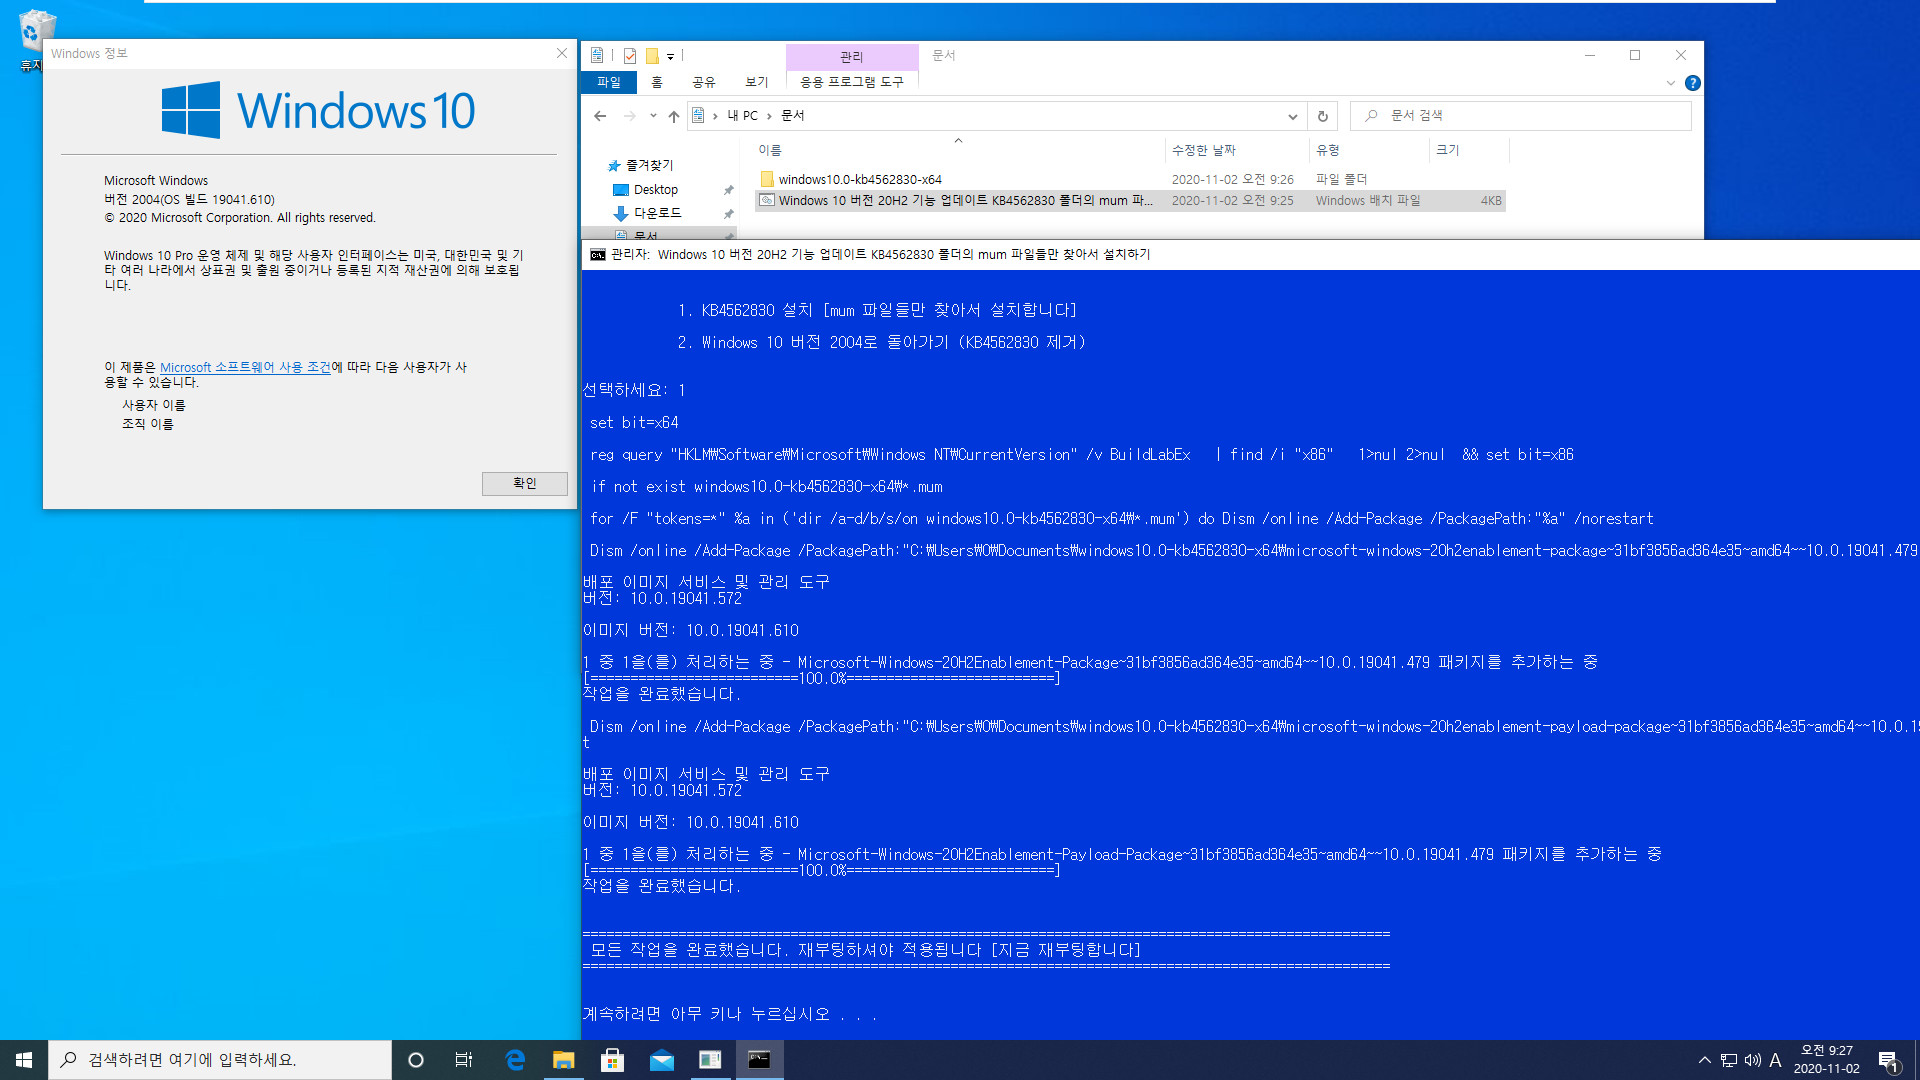 Windows 10 버전 20H2 기능 업데이트 KB4562830 폴더의 mum 파일들만 찾아서 설치하기.bat - 크로미엄 엣지 설치하지 않고 버전 20H2만 설치하기 테스트 2020-11-02_092702.jpg